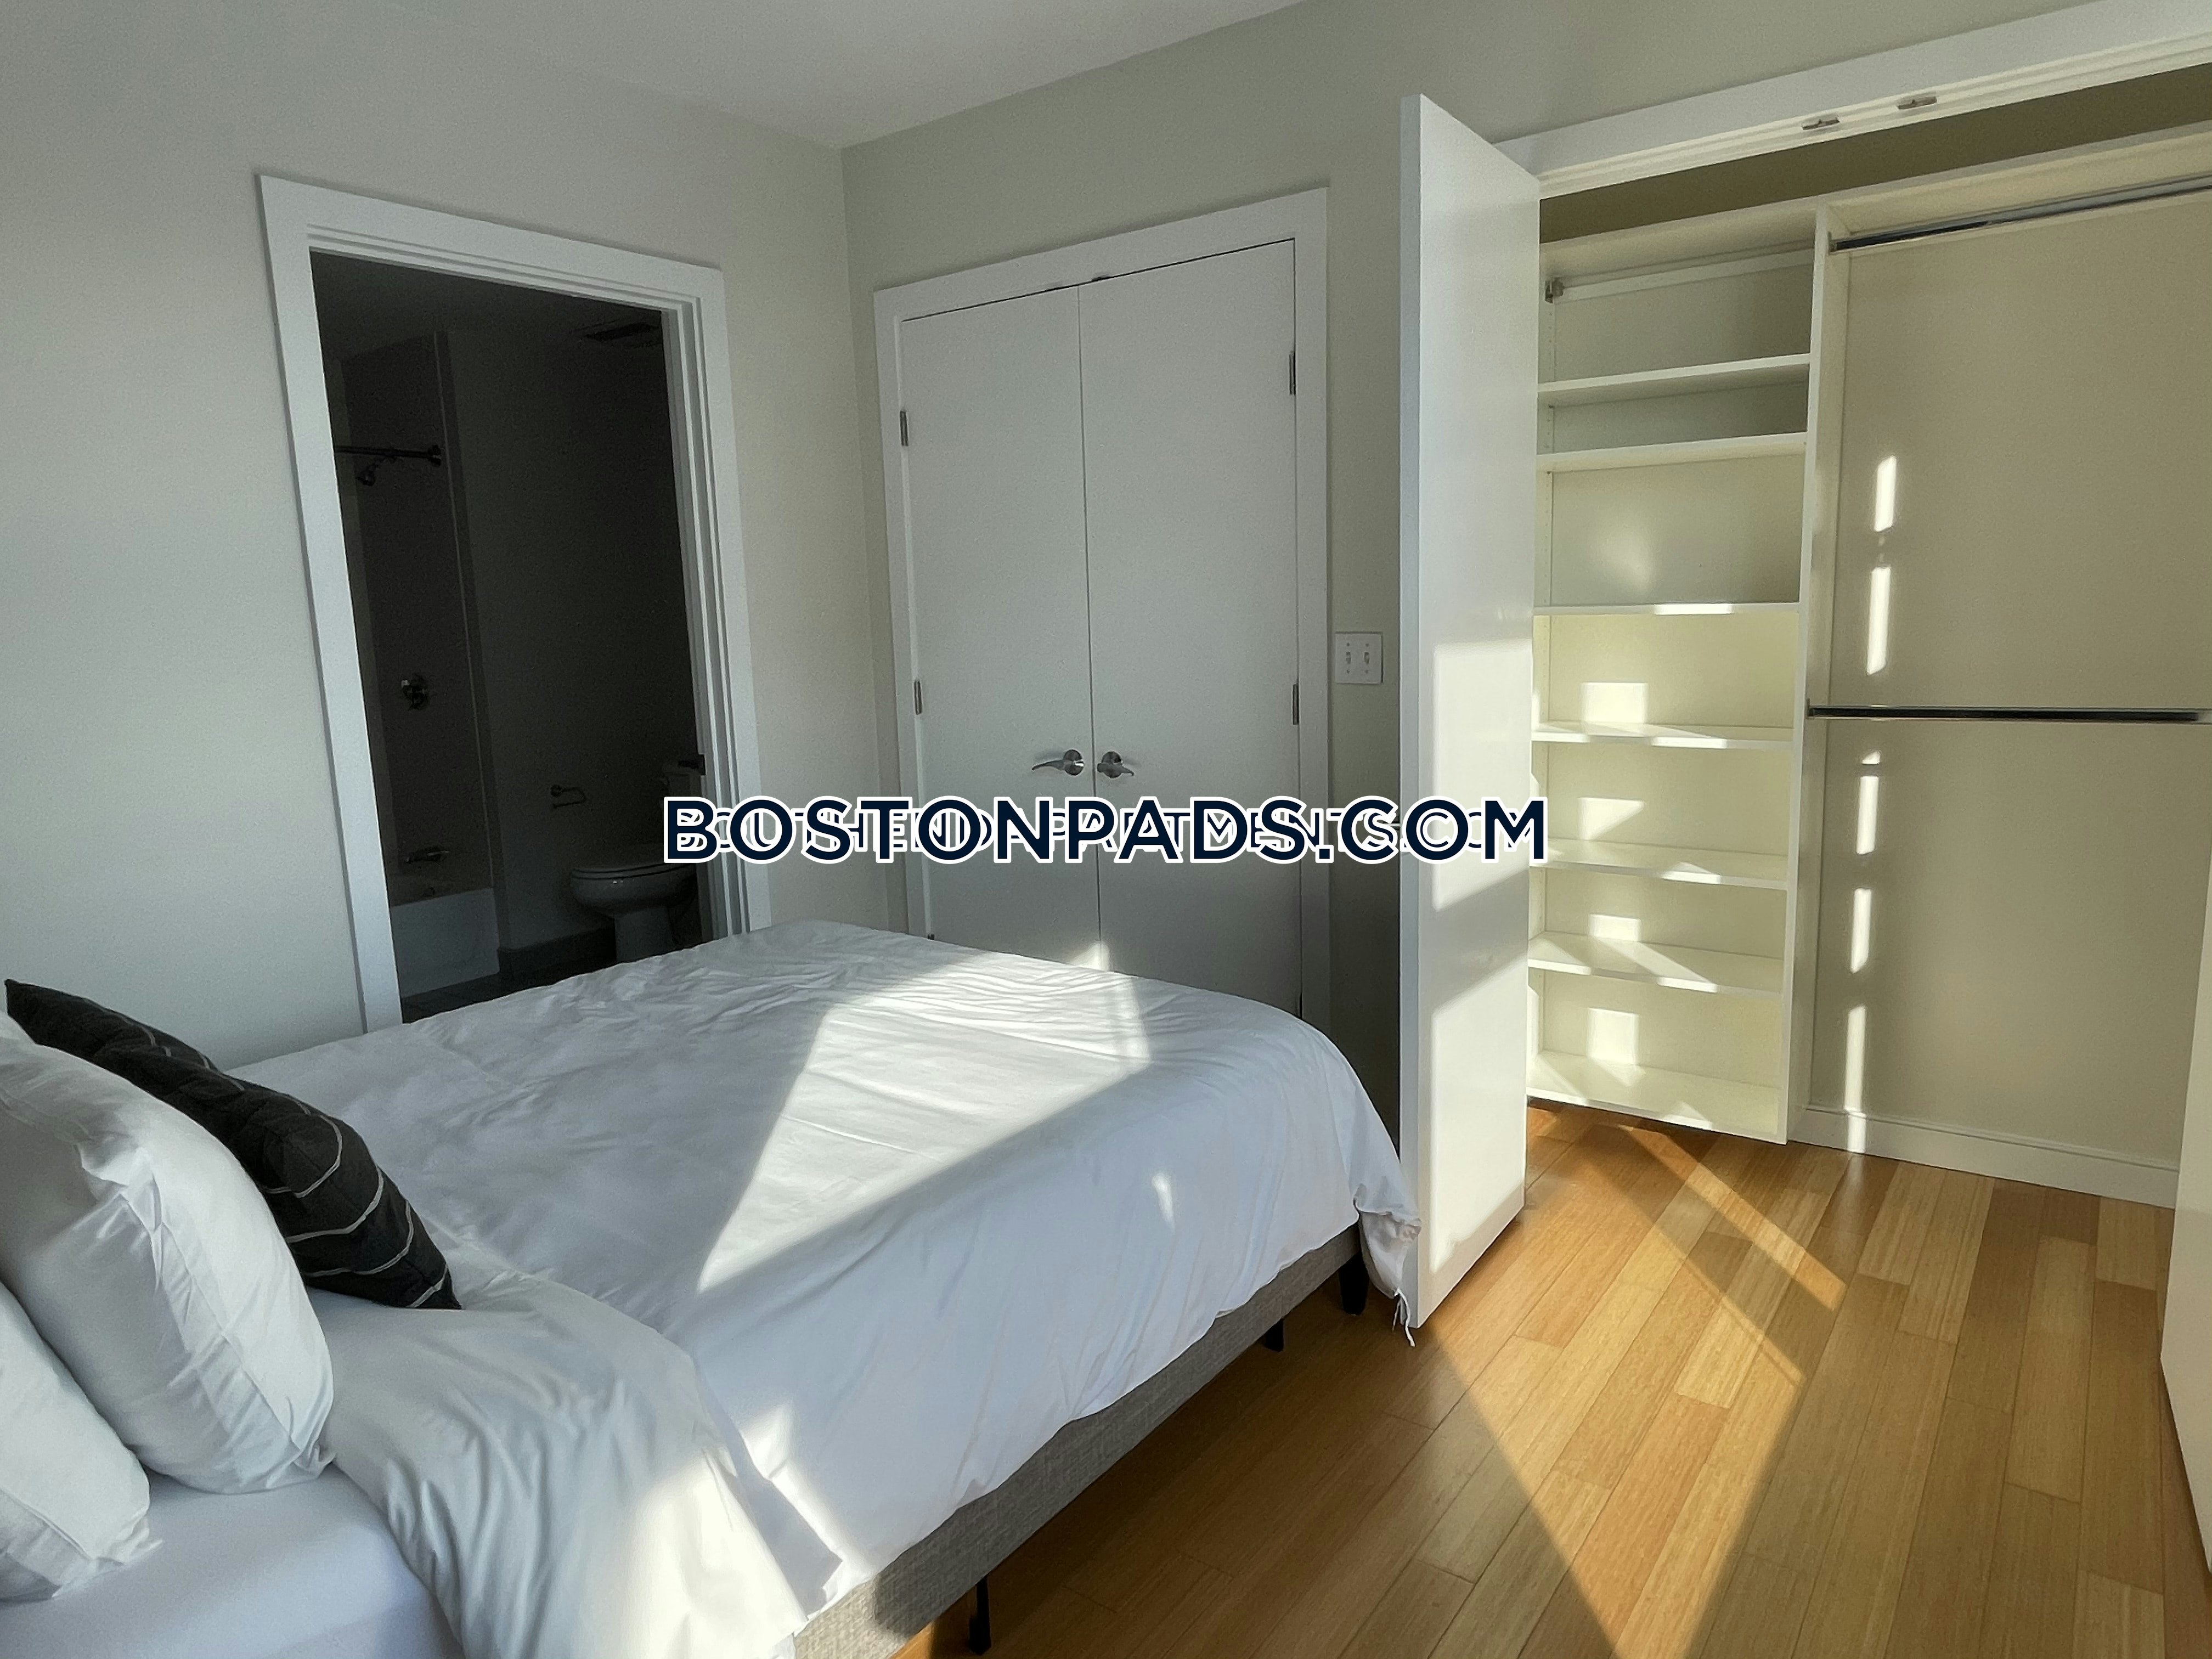 Boston - $4,300